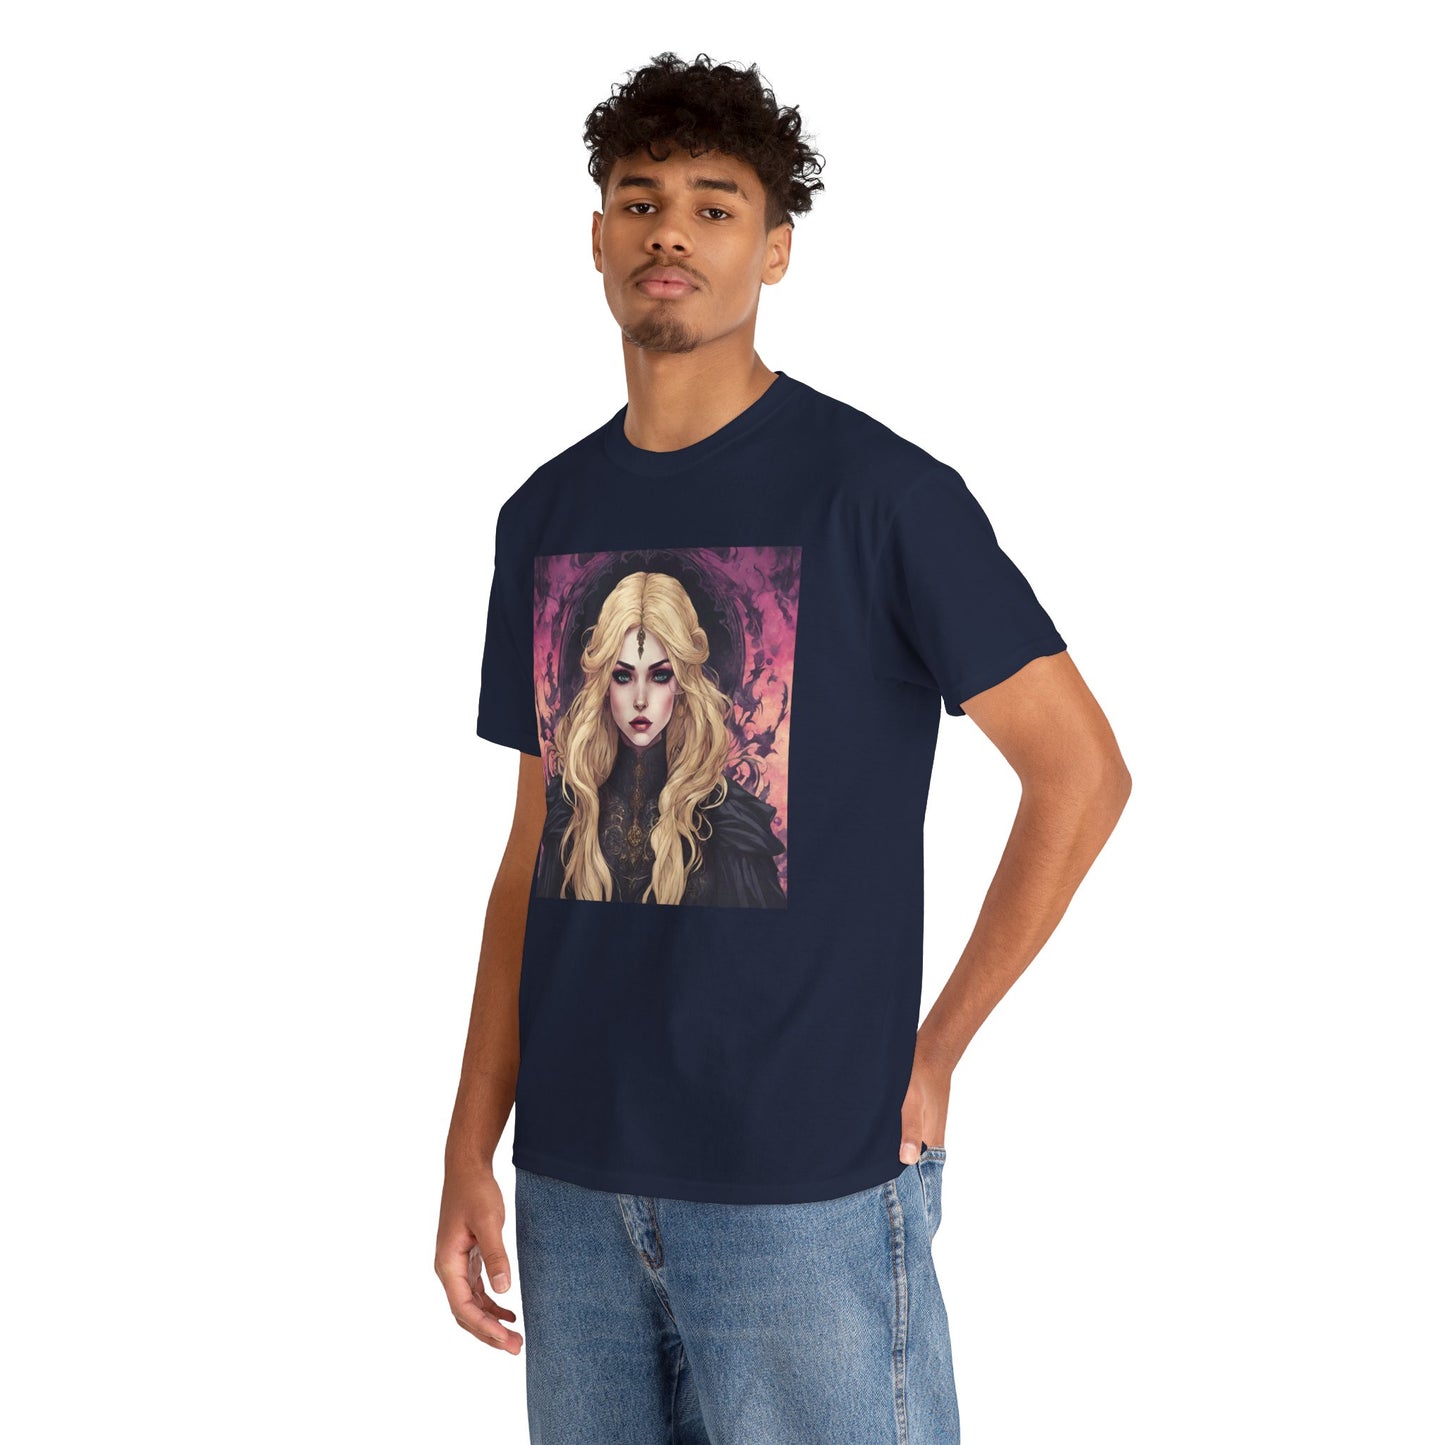 Goth Princess v3 T-shirt